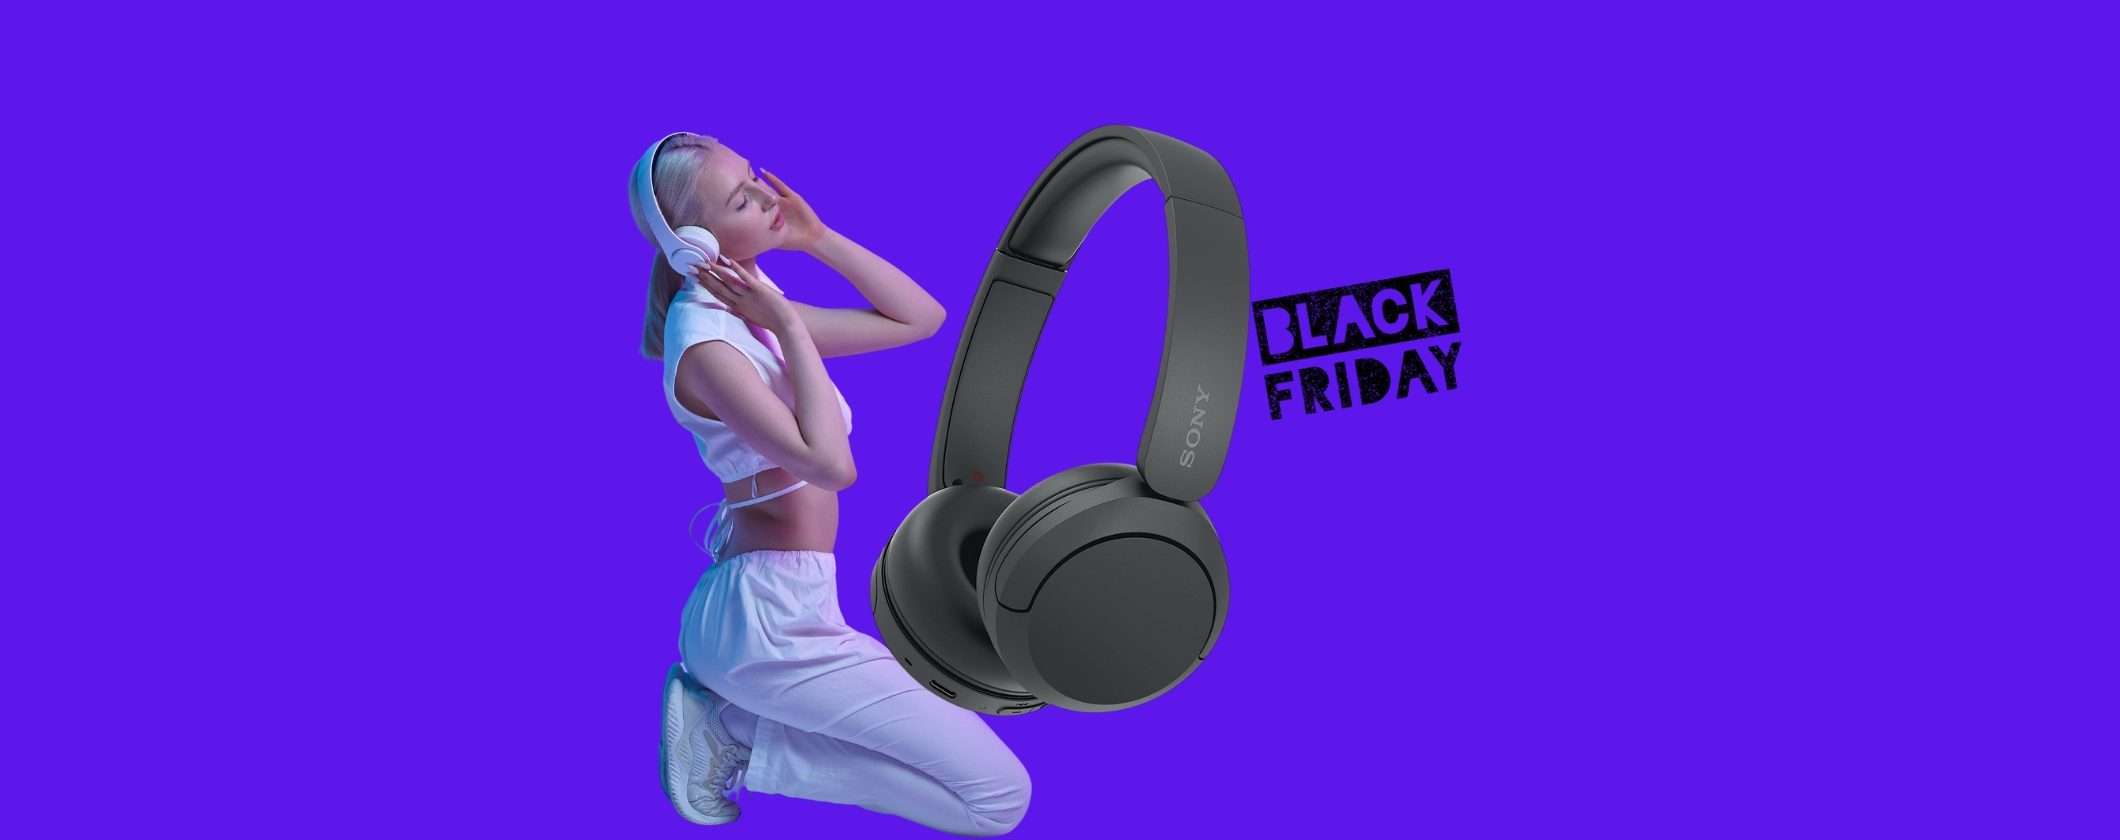 Cuffie Wireless Sony a PREZZO SHOCK: è il Black Friday Amazon